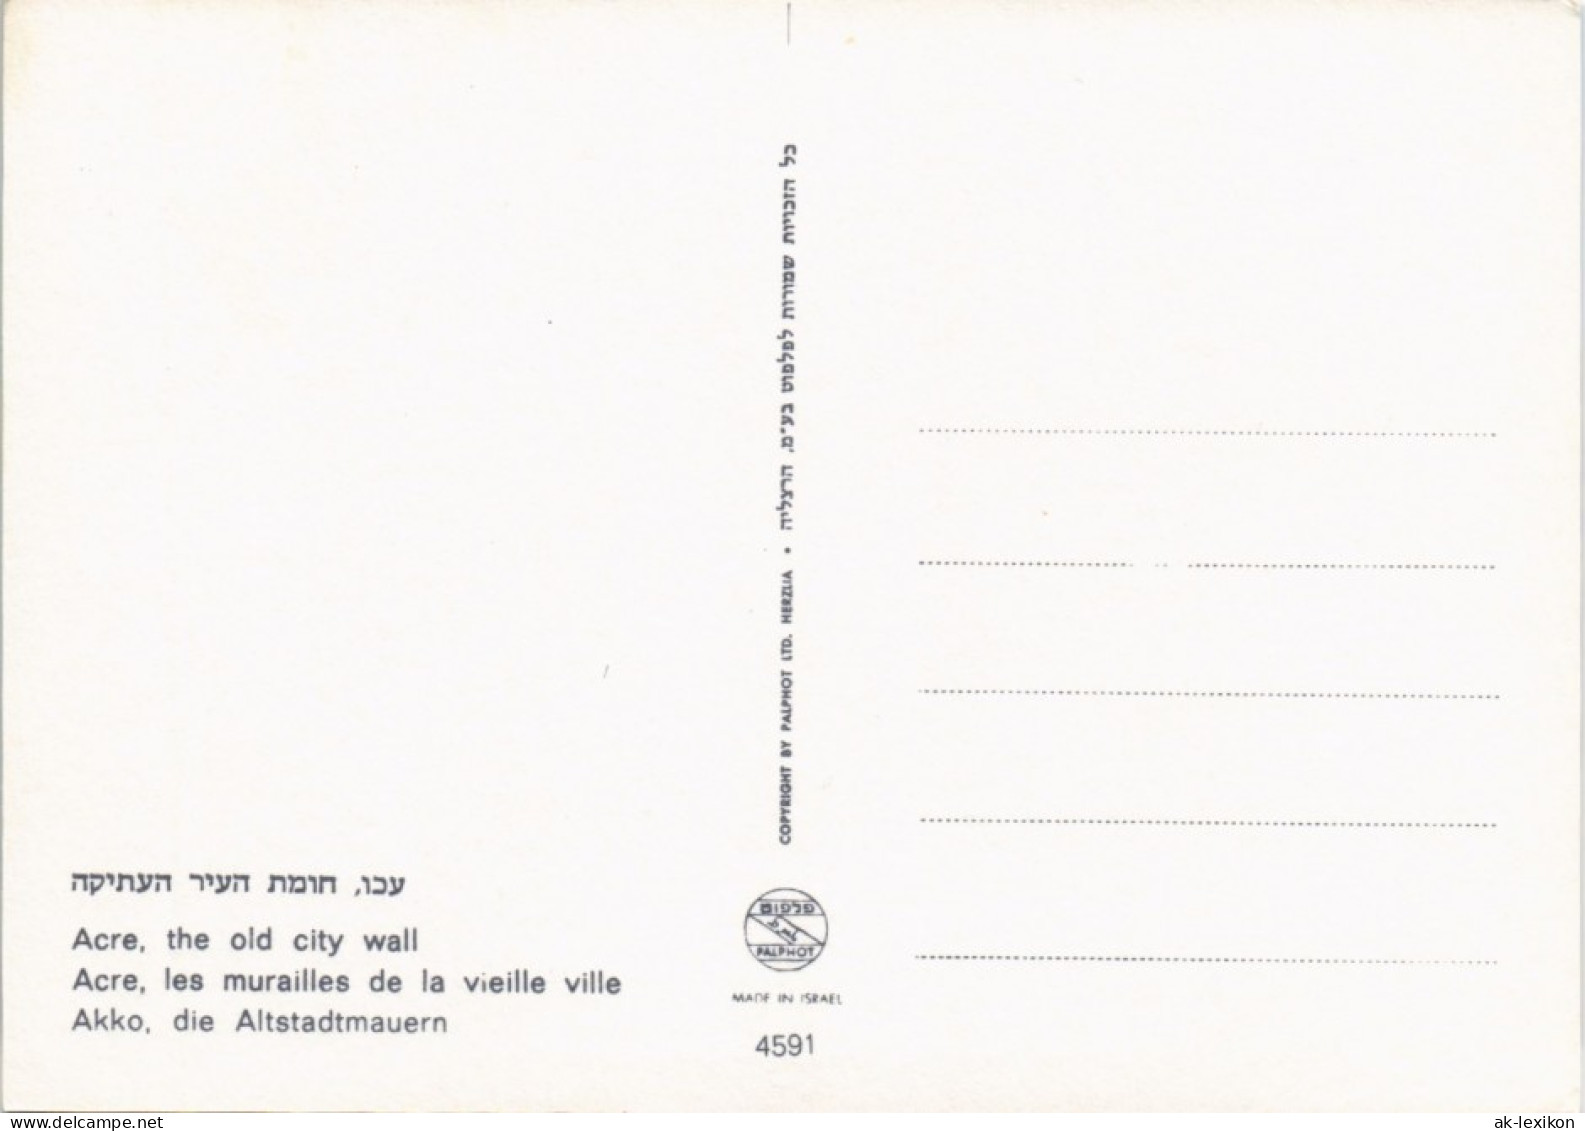 Postcard Akkon (Acre) עכו Akko Israel Altstadt (Old City Wall) 1990 - Israel